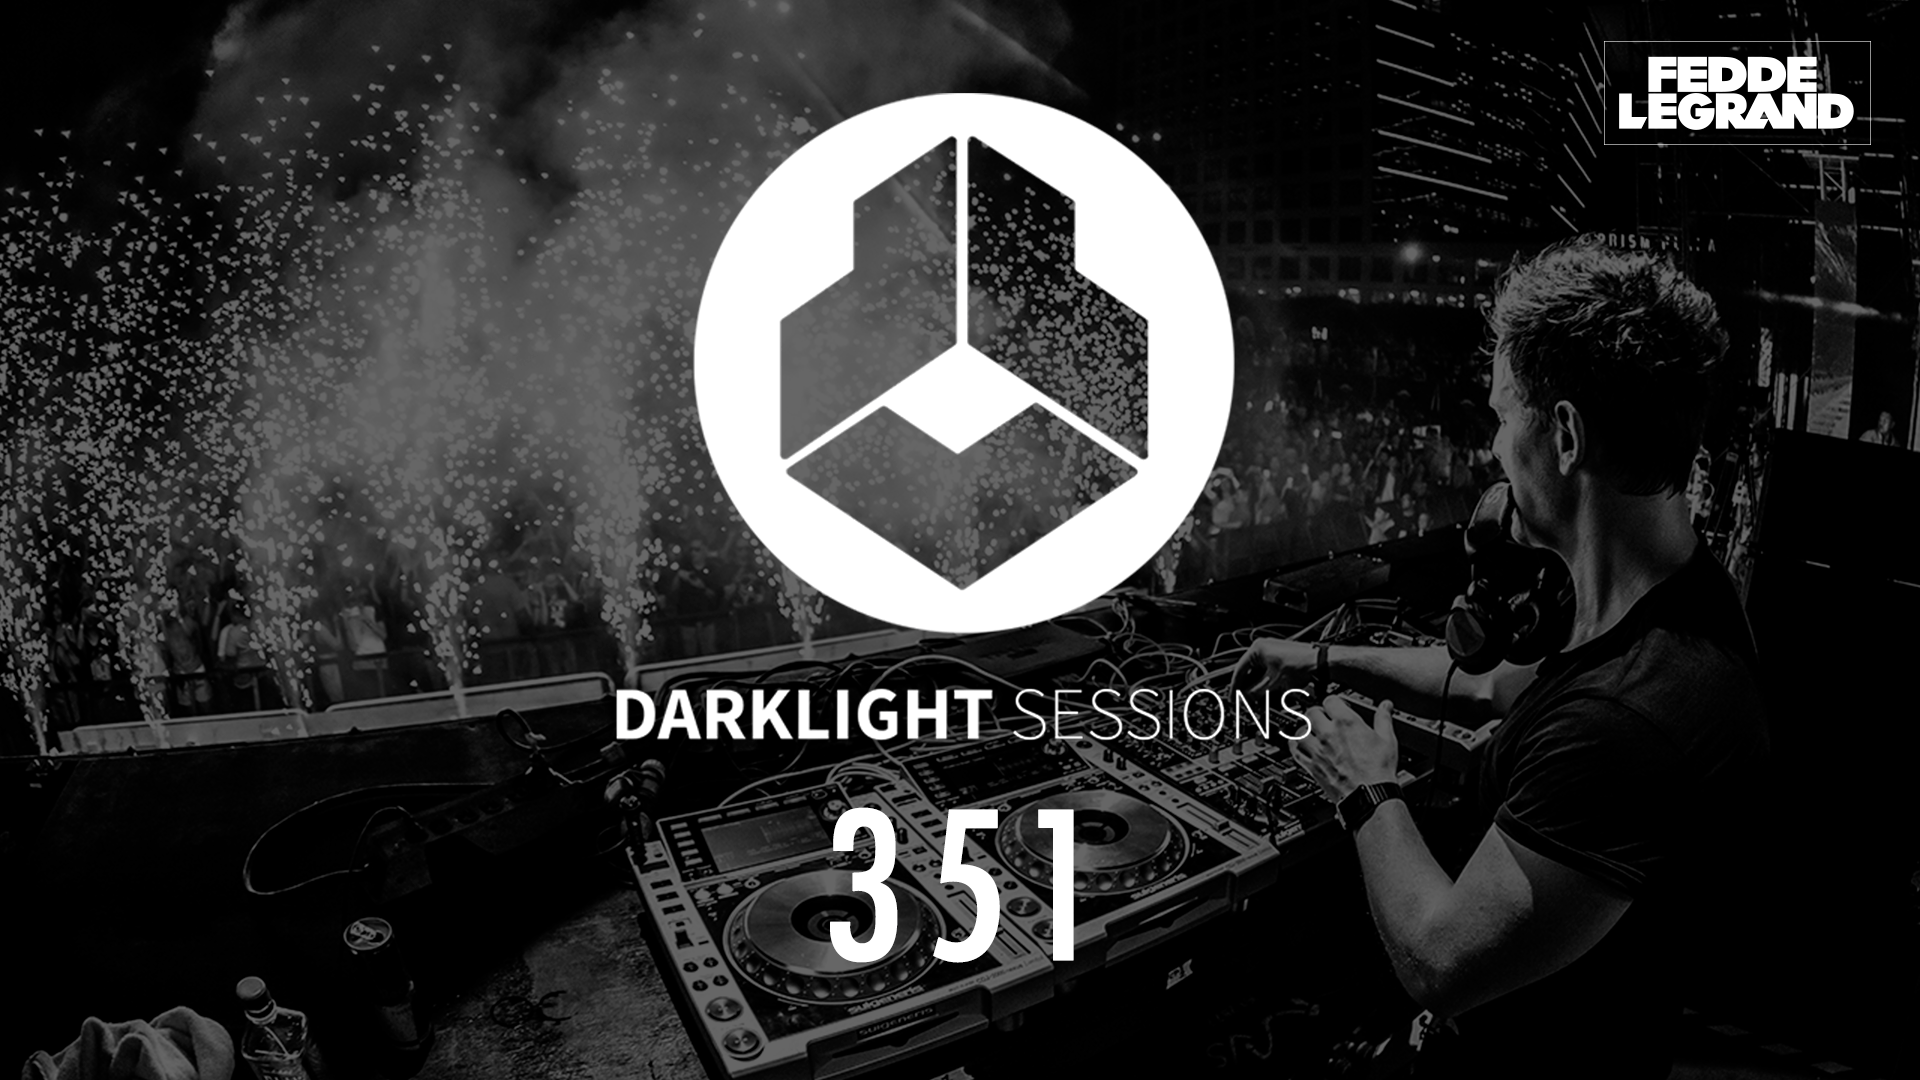 Darklight Sessions 351